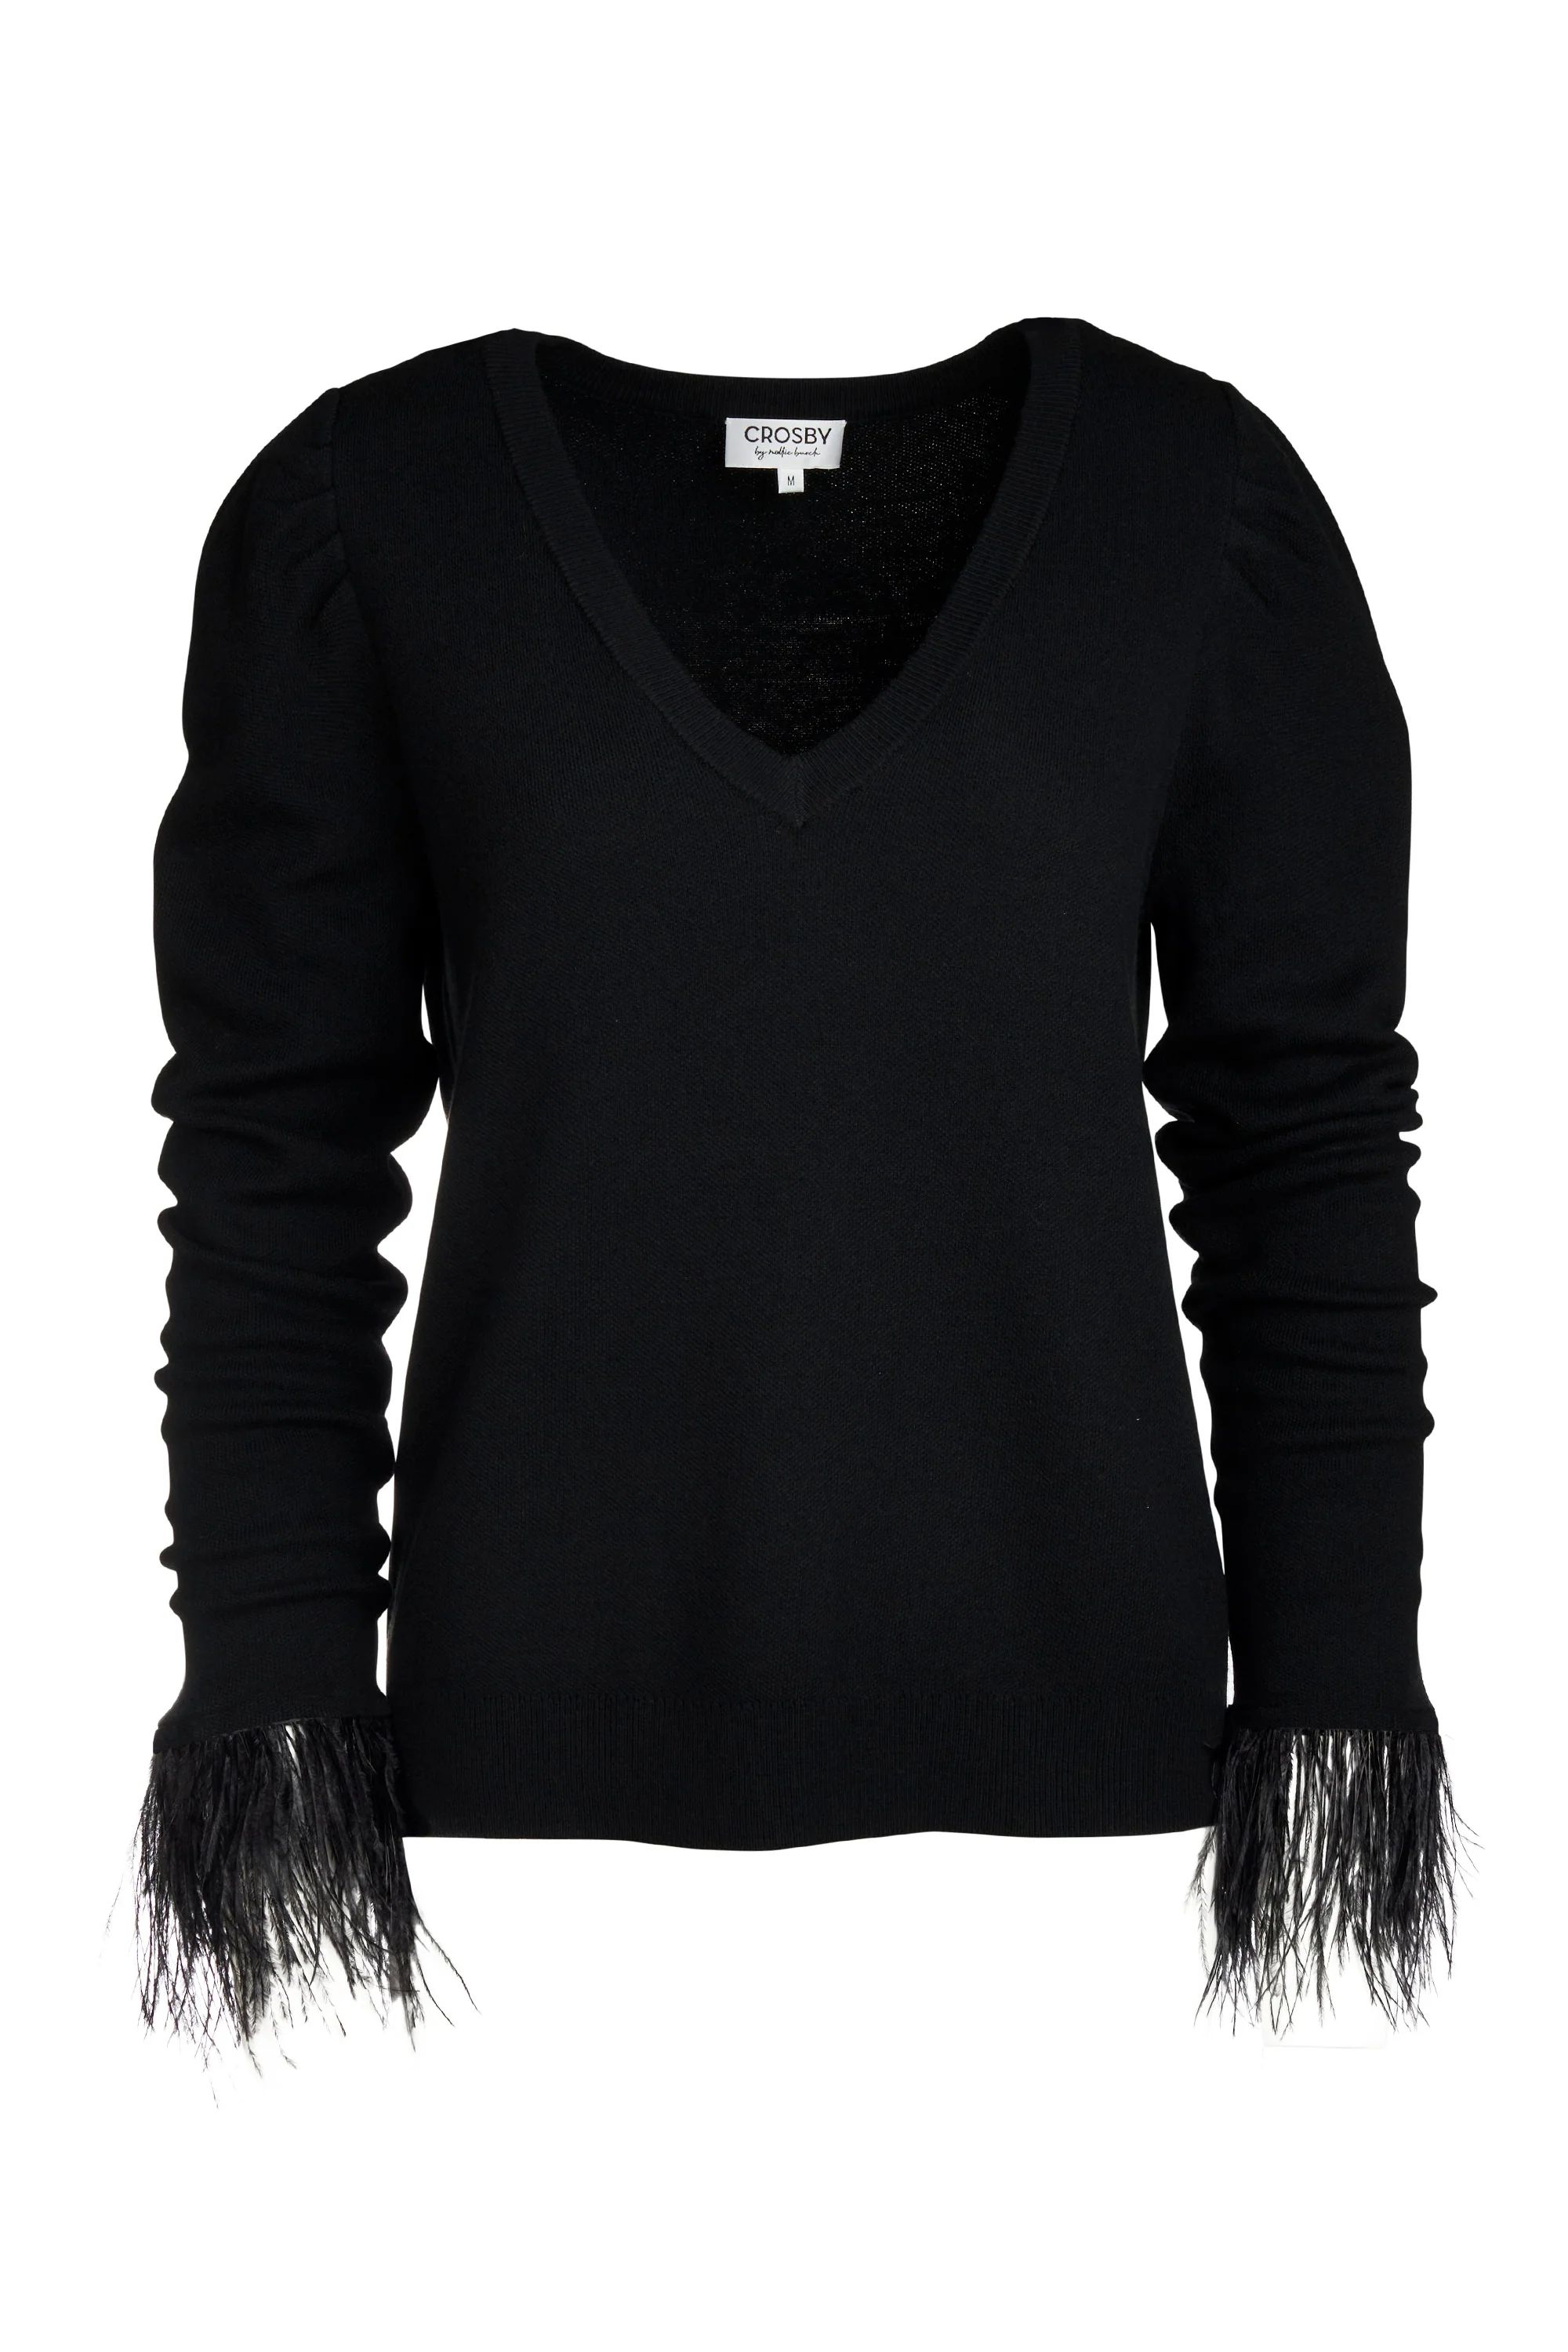 Teddie Sweater in Black - CROSBY by Mollie Burch | CROSBY by Mollie Burch